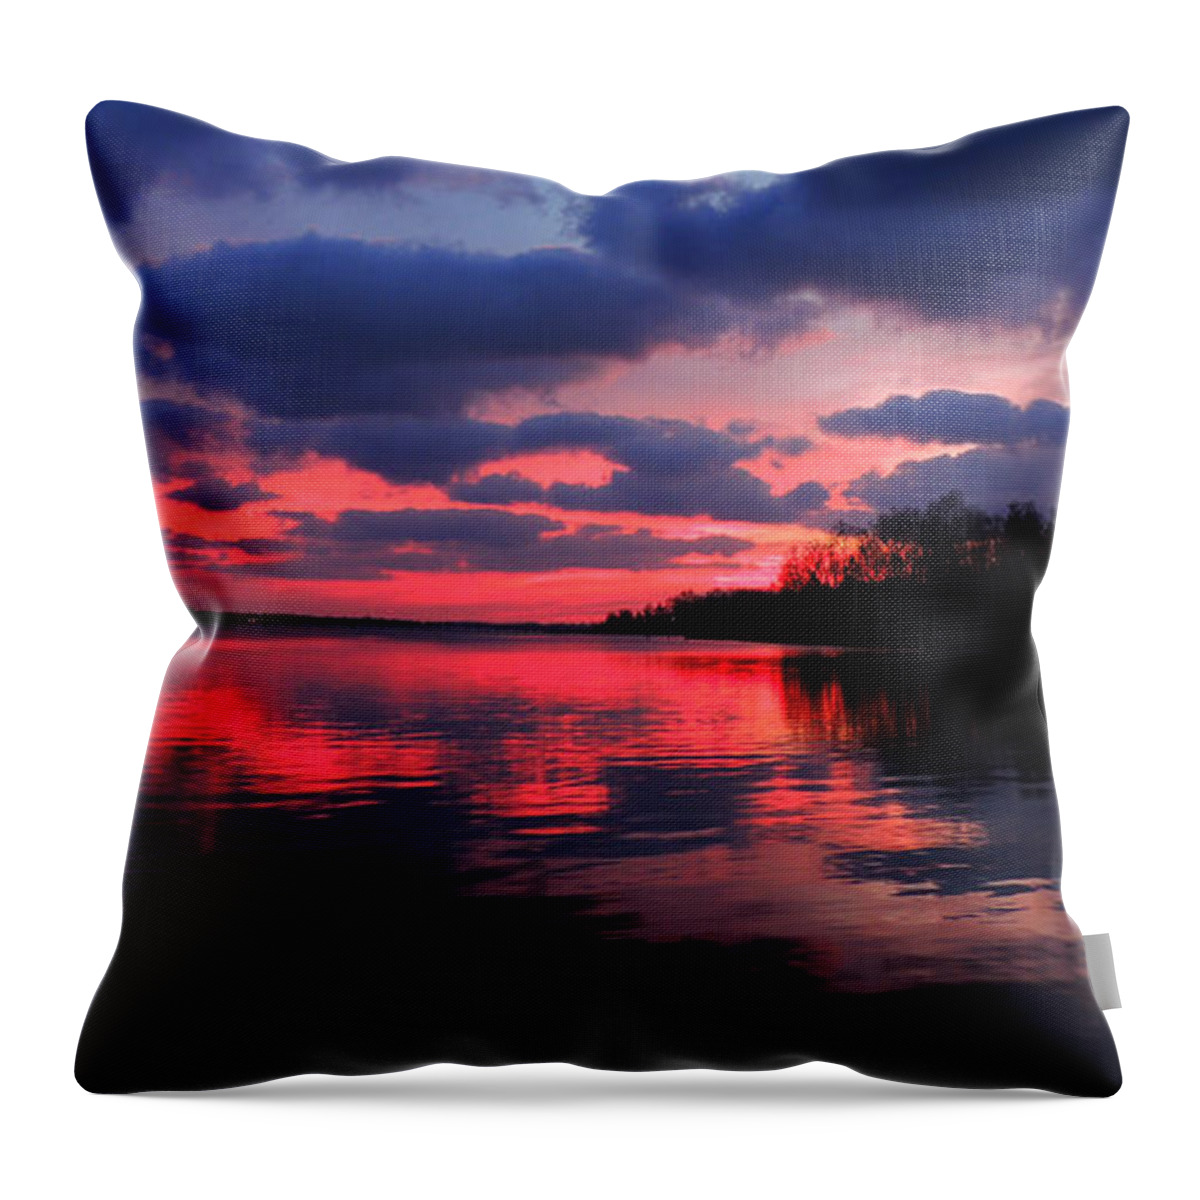 Locust Sunset Throw Pillow featuring the photograph Locust Sunset by Raymond Salani III